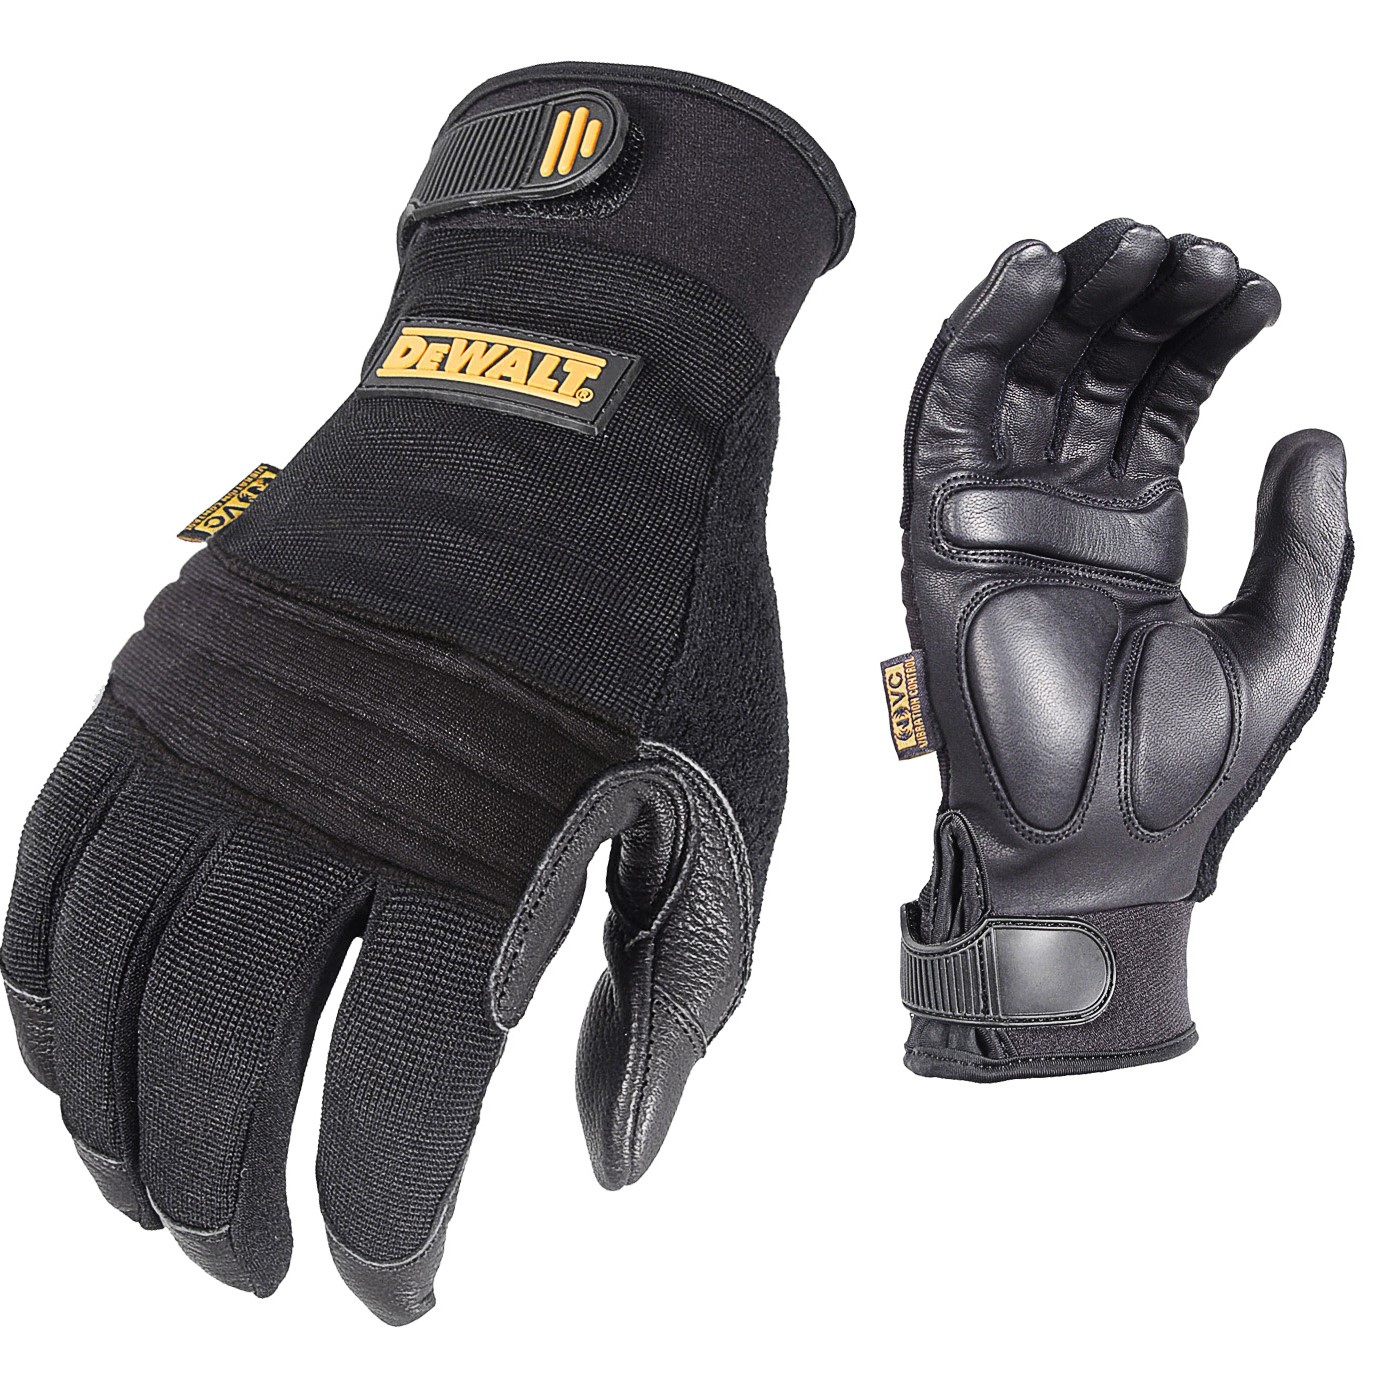 DPG250 Premium Padded Vibration Reducing Glove - Size L - Vibration Reducing Gloves